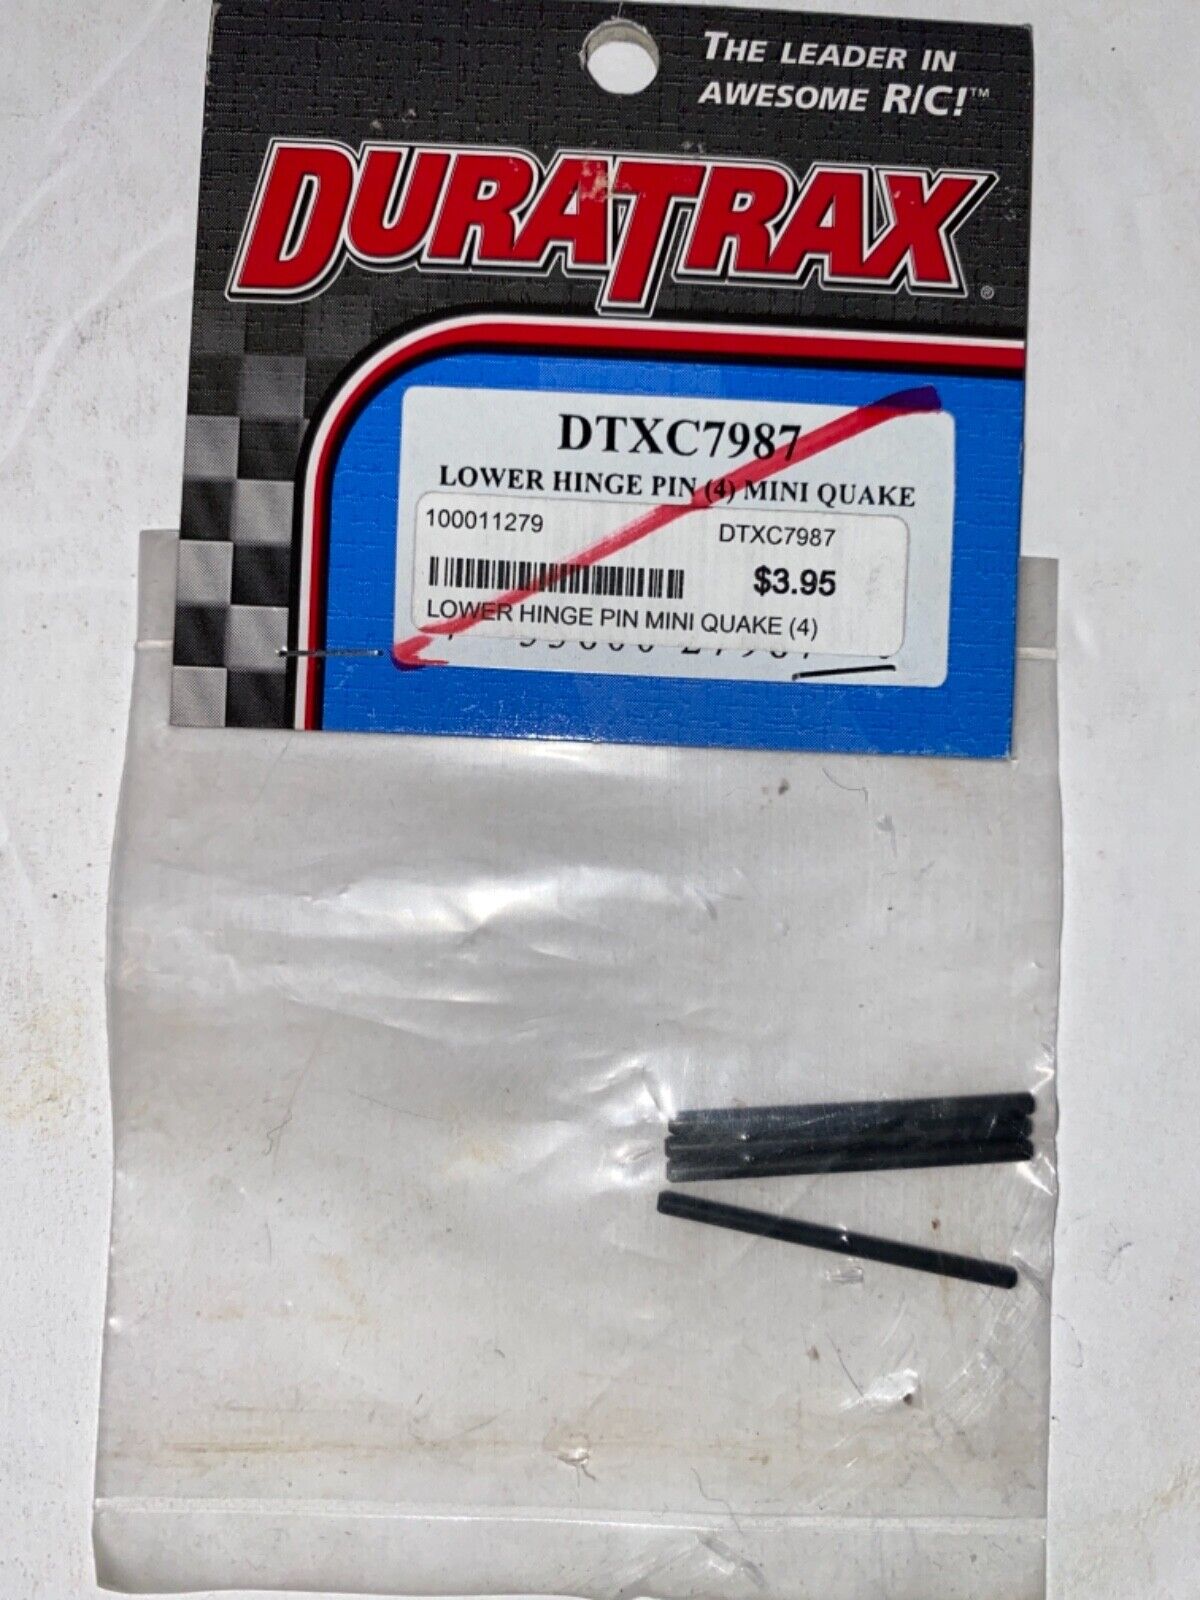 DURATRAX Lower Hinge Pin (4) Mini Quake #DTXC7987